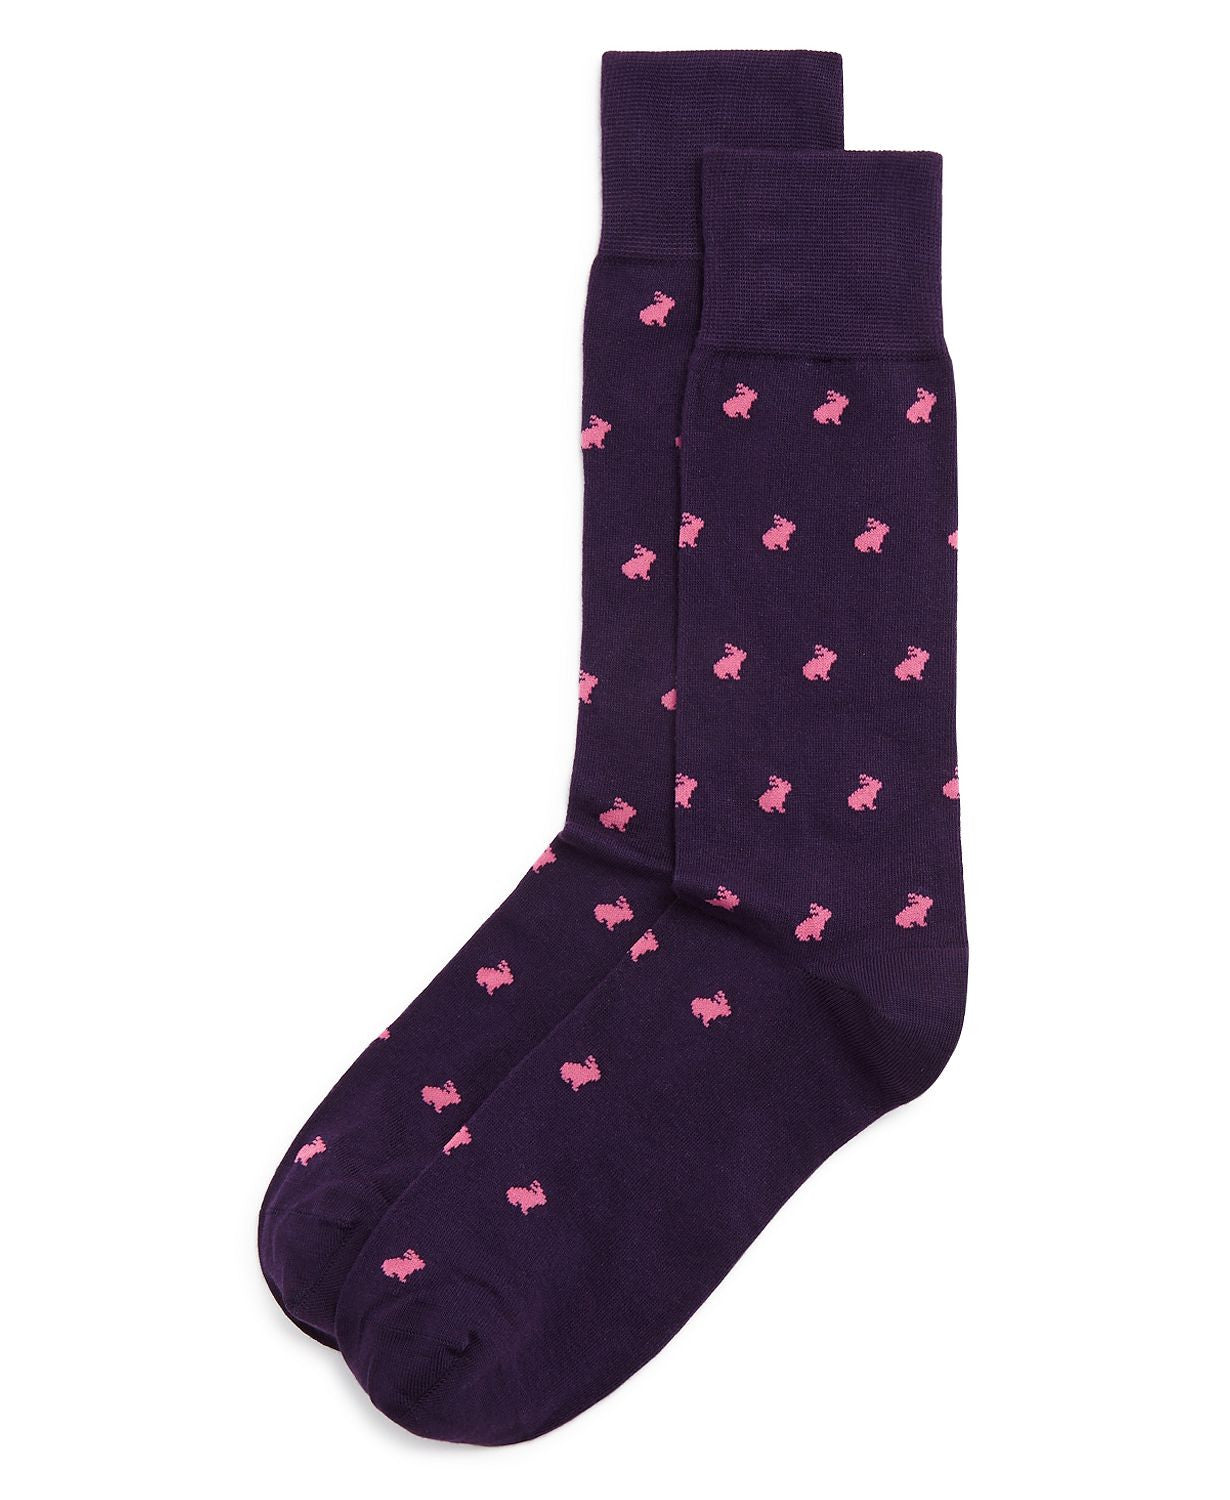 Paul Smith Little Rabbit Socks Purple